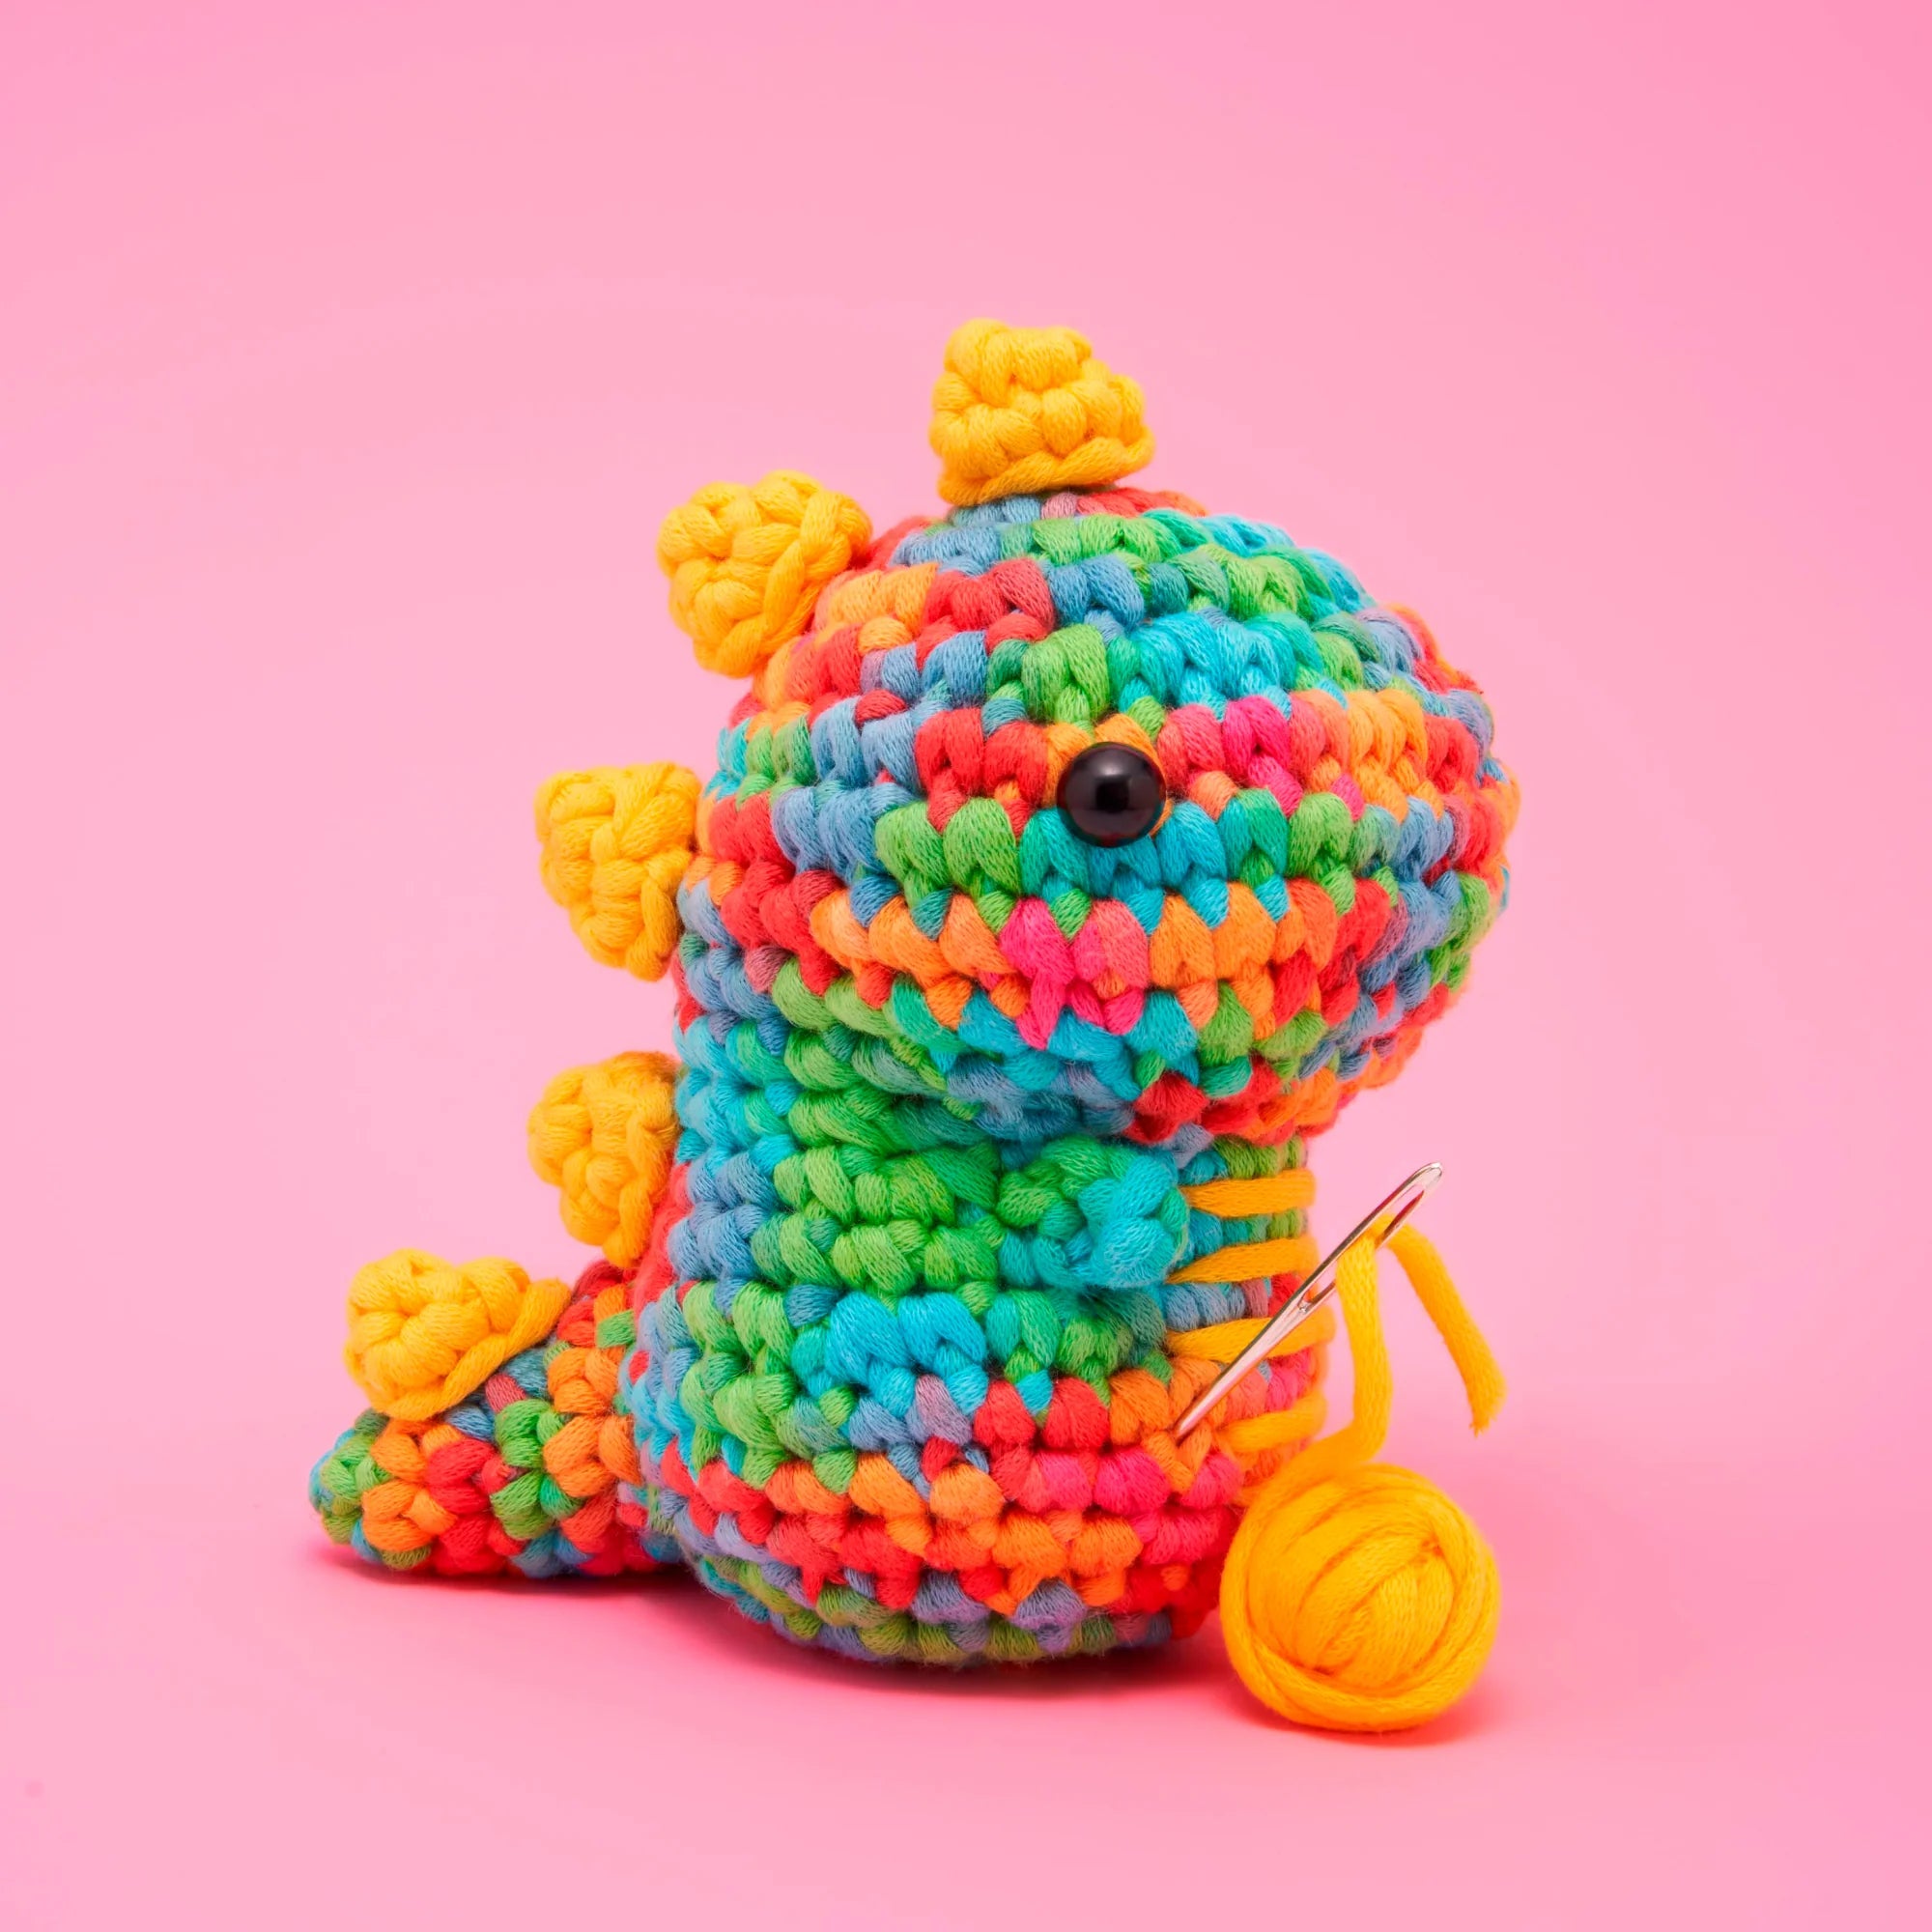 Felix the Fox: The Woobles Learn to Crochet Kit